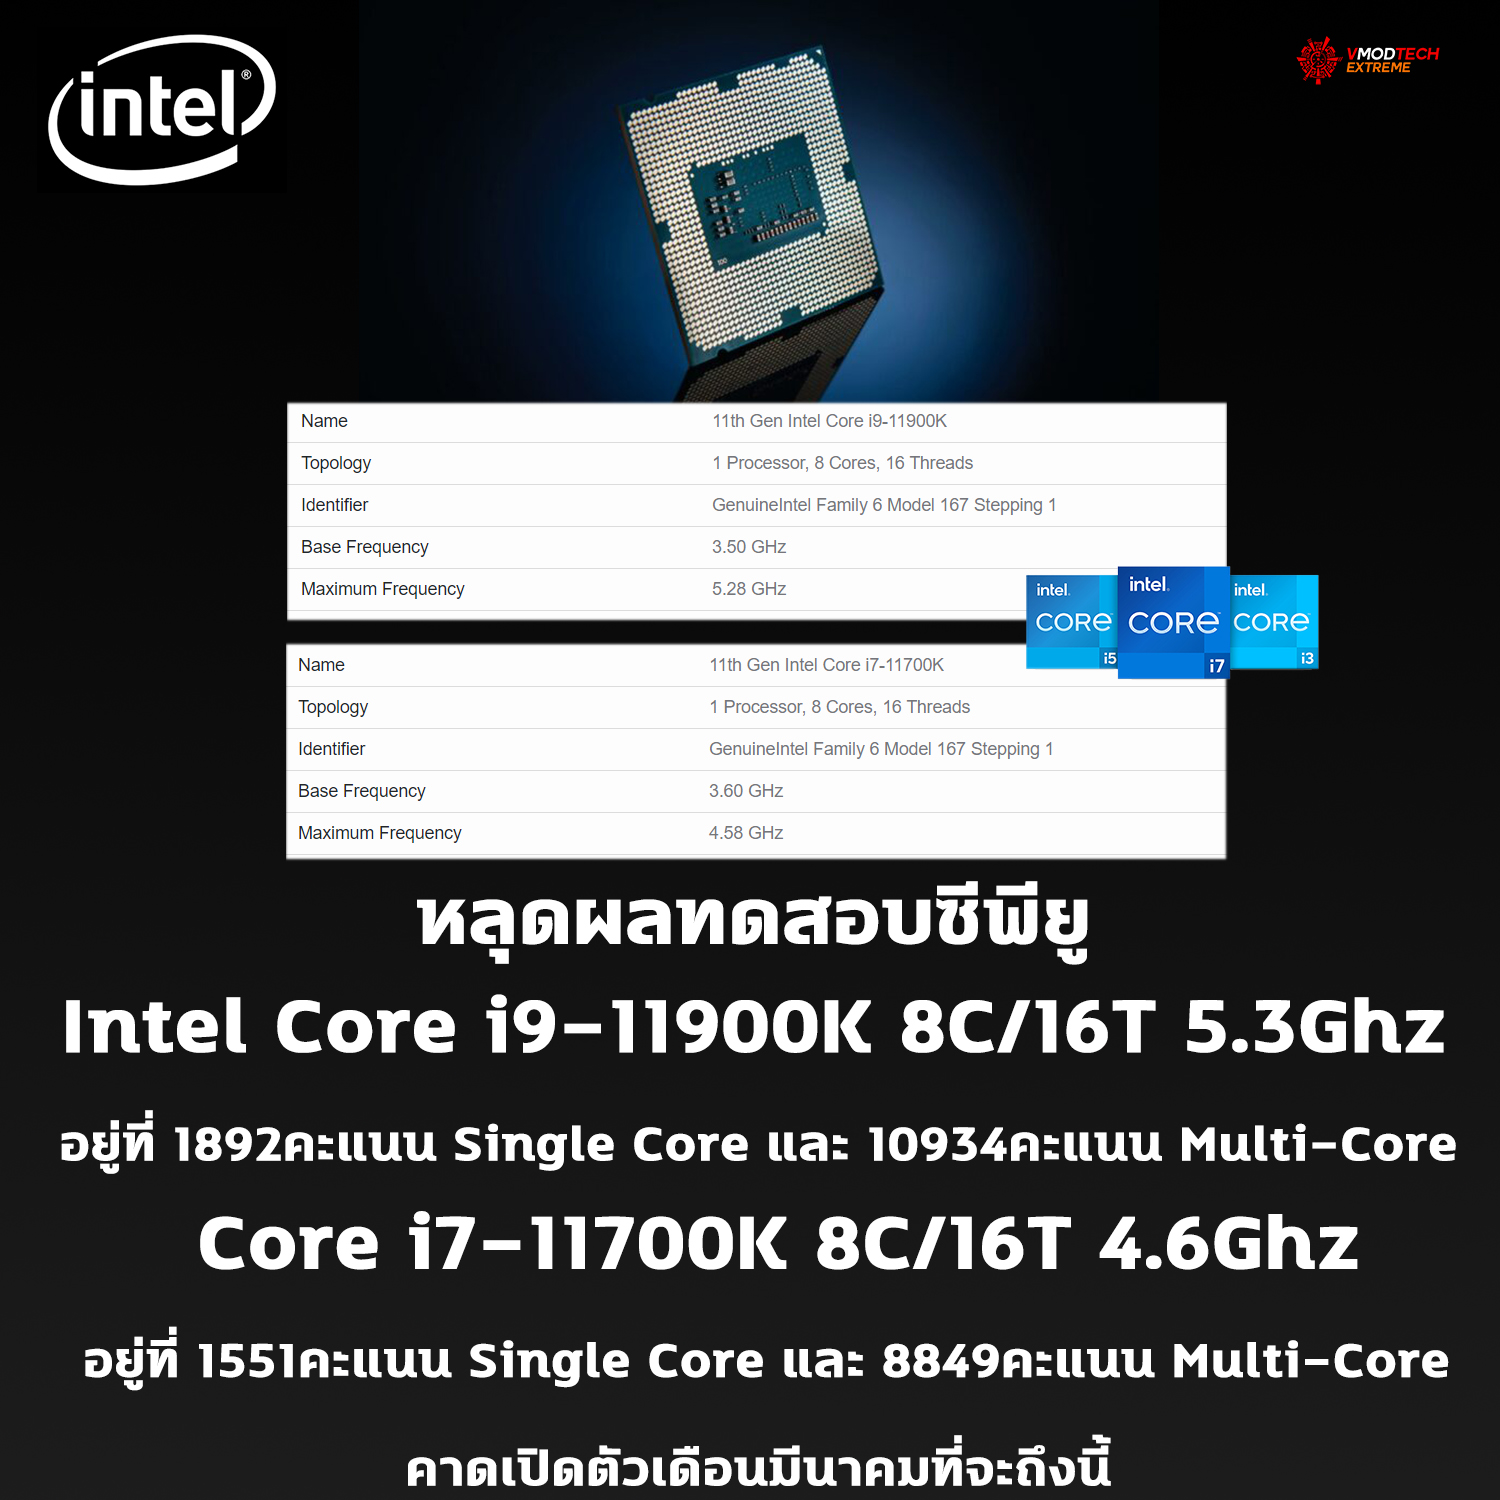 intel core i9 11900k core i7 11700k benchmark หลุดผลทดสอบซีพียู Intel Core i9 11900K และ Core i7 11700K อย่างไม่เป็นทางการ